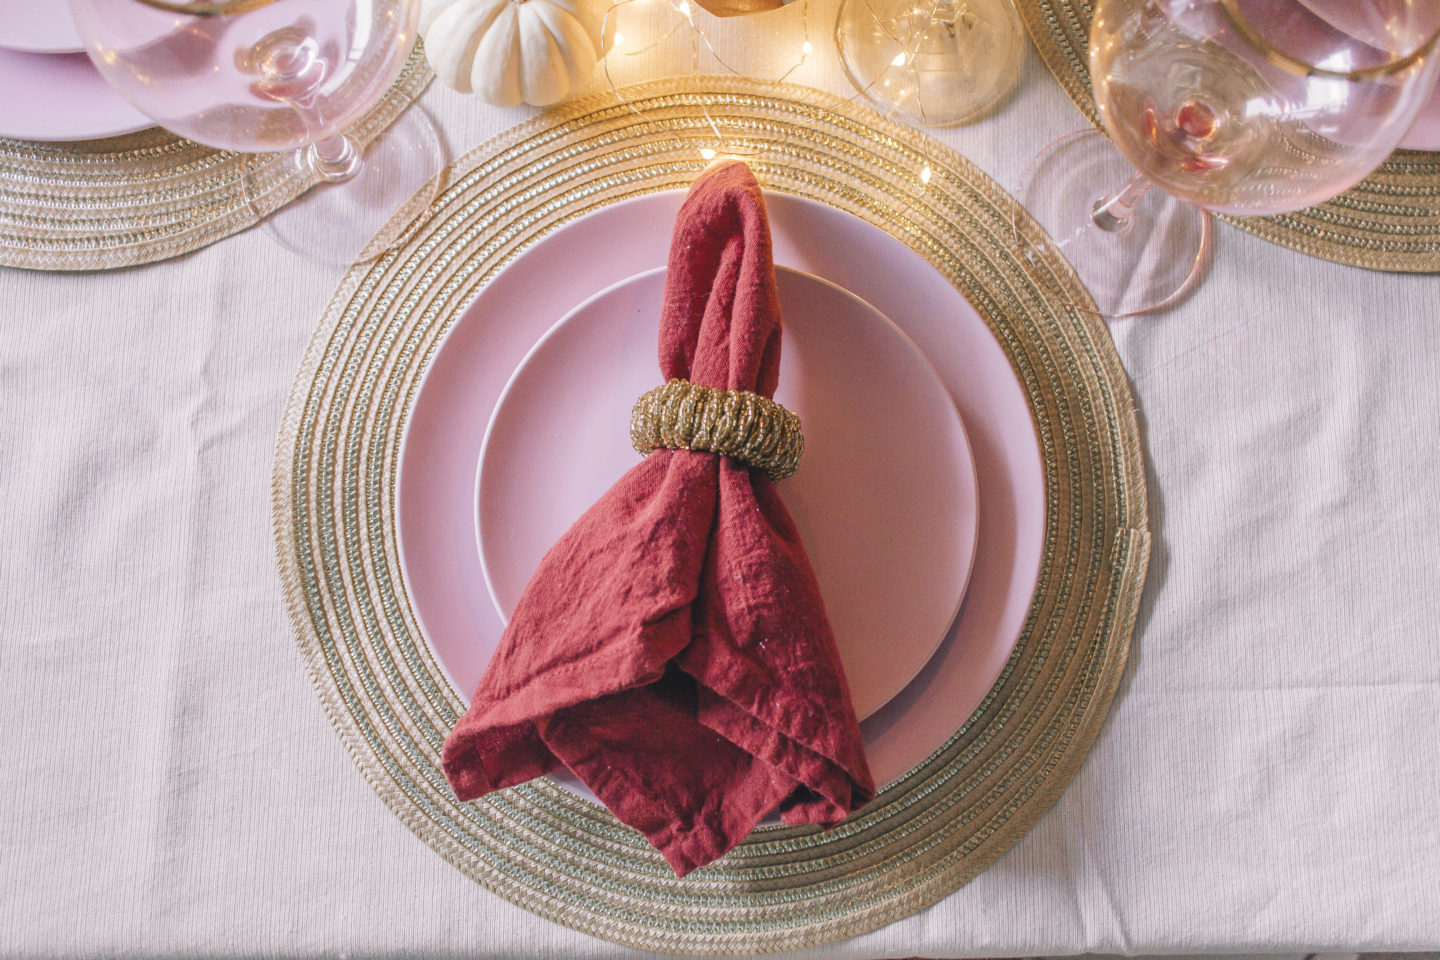 A Thanksgiving Tablescape, friendsgiving table, thanksgiving decor // wanderabode.com